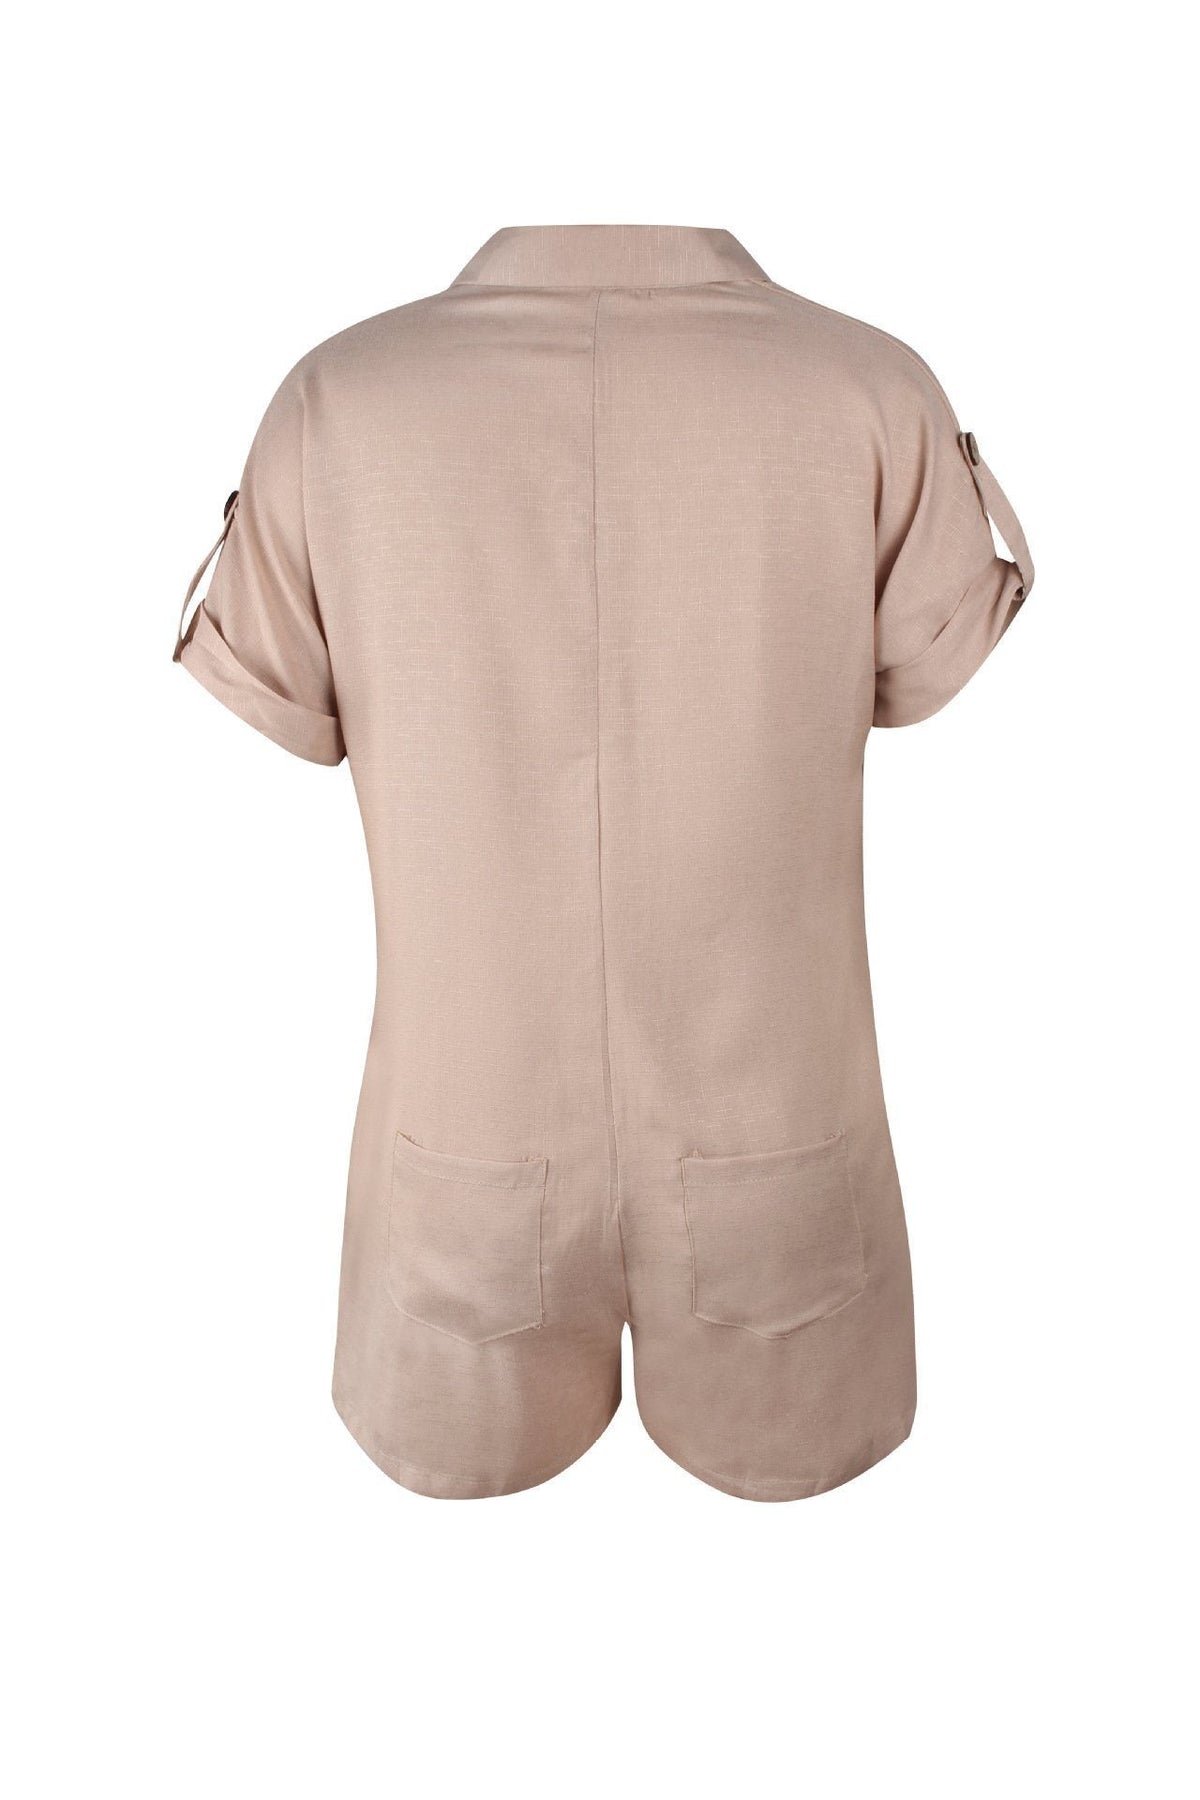 Streetwear Short Sleeve Shirt Romper - Red Jumpsuits & Rompers 5201812281531 